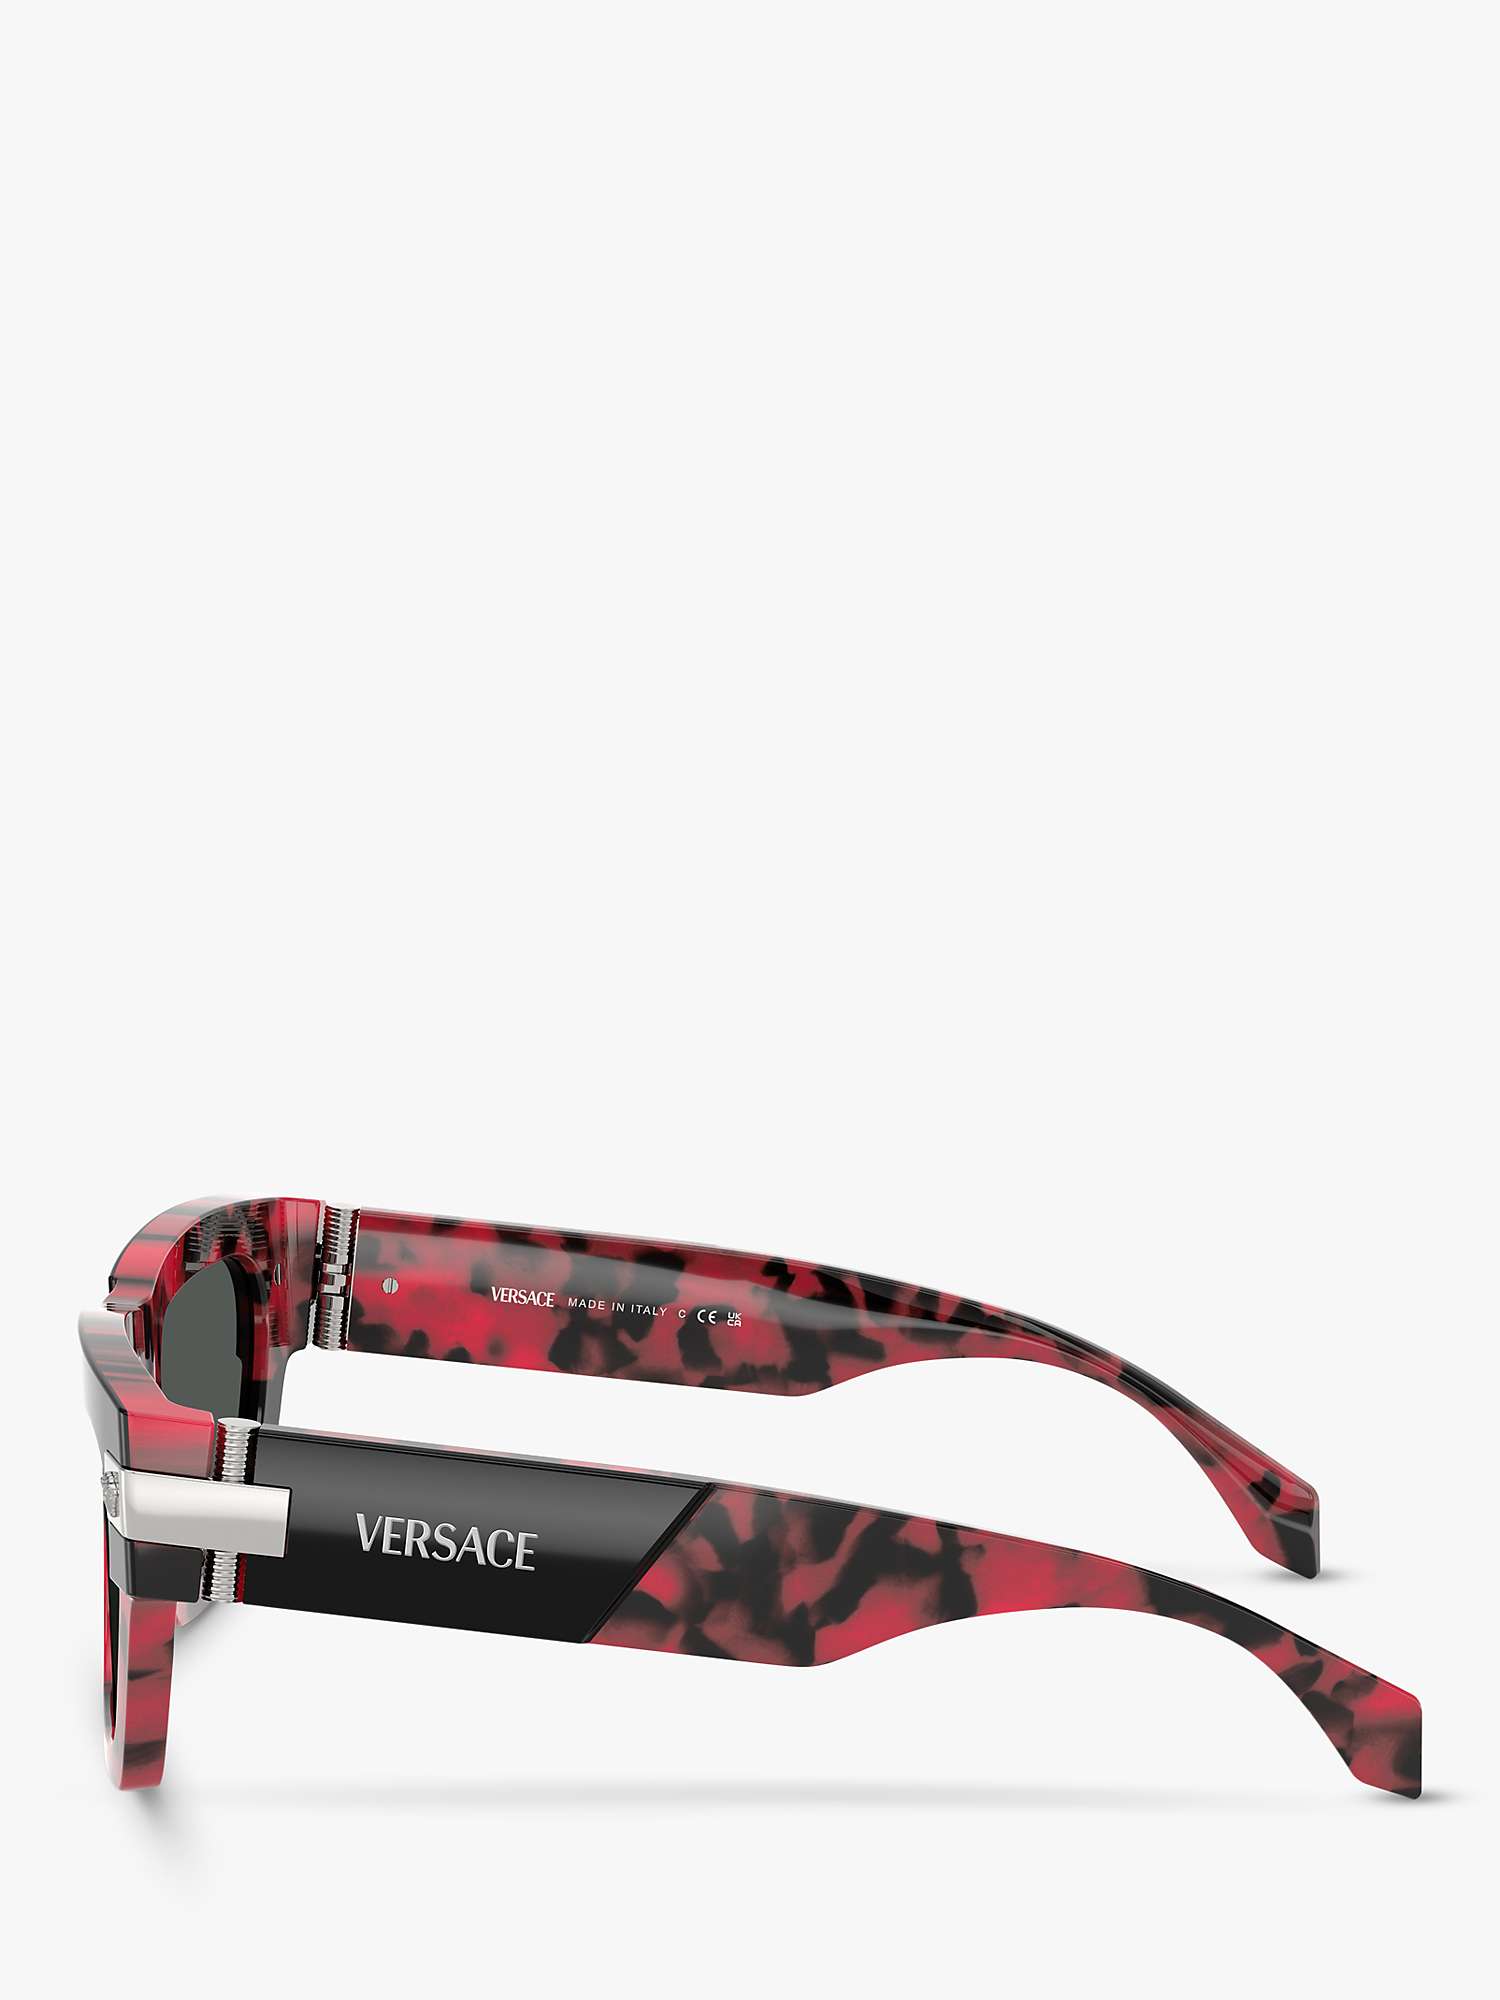 Buy Versace VE4464 Men's D-Frame Sunglasses, Black on Red Havana/Grey Online at johnlewis.com